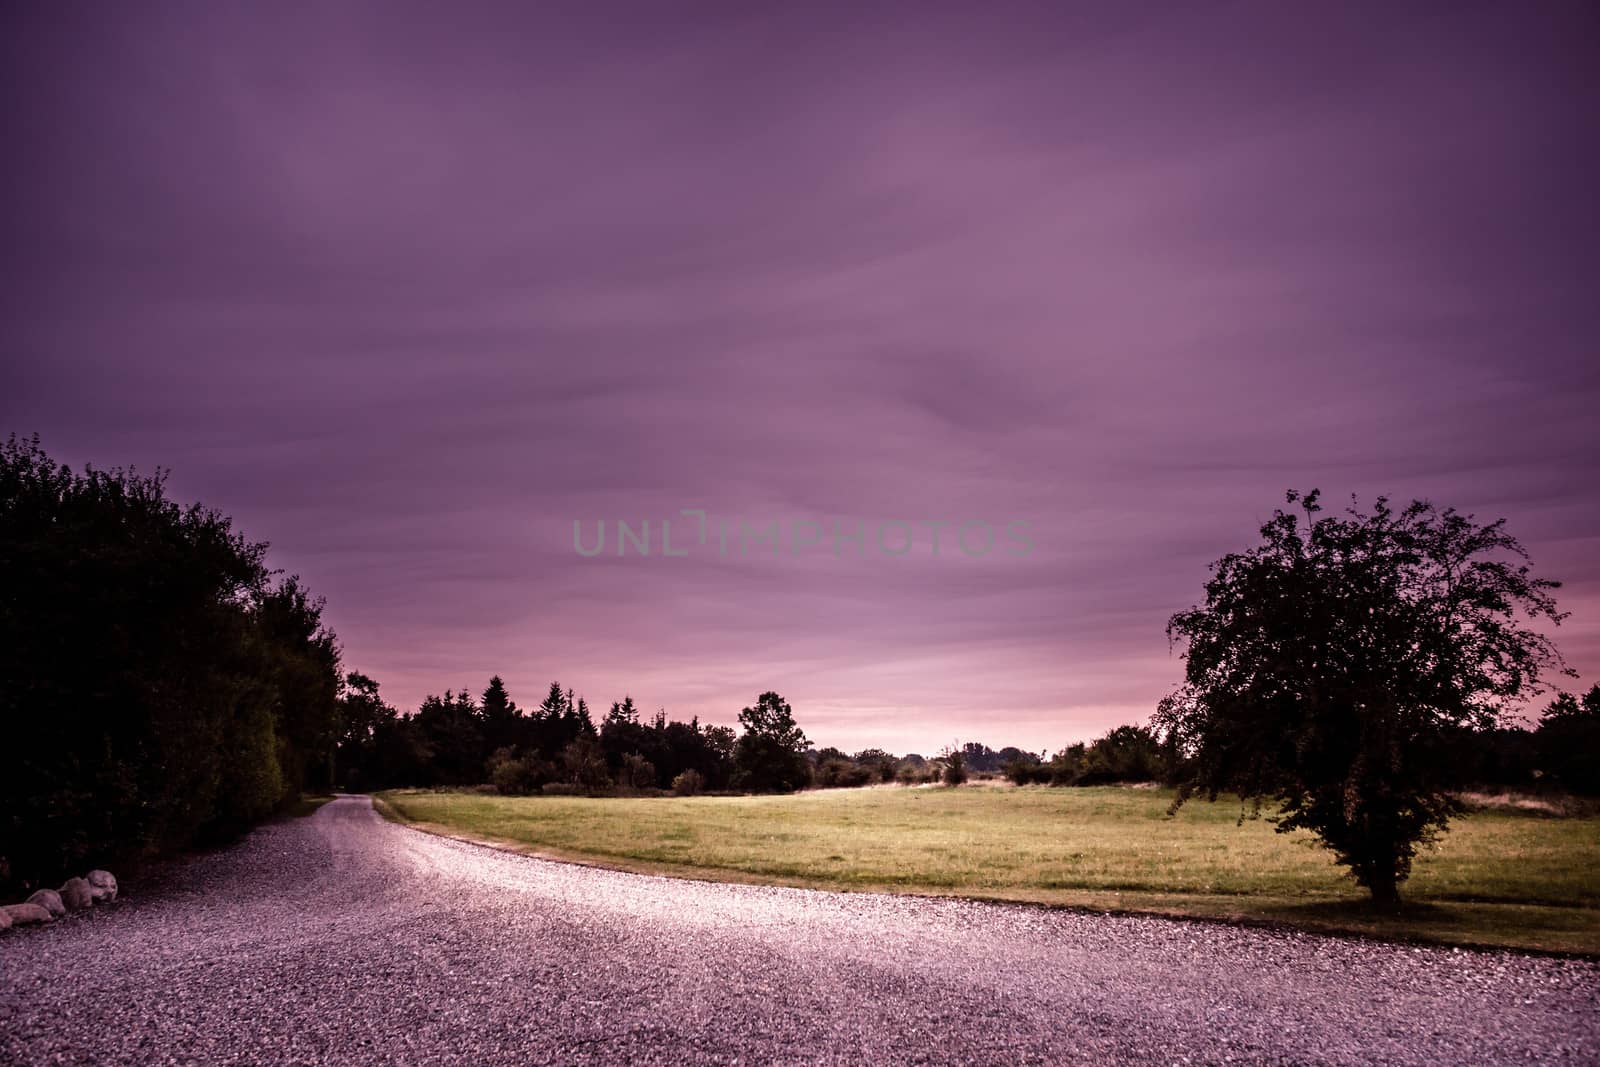 Nature path in a purple colored landscape